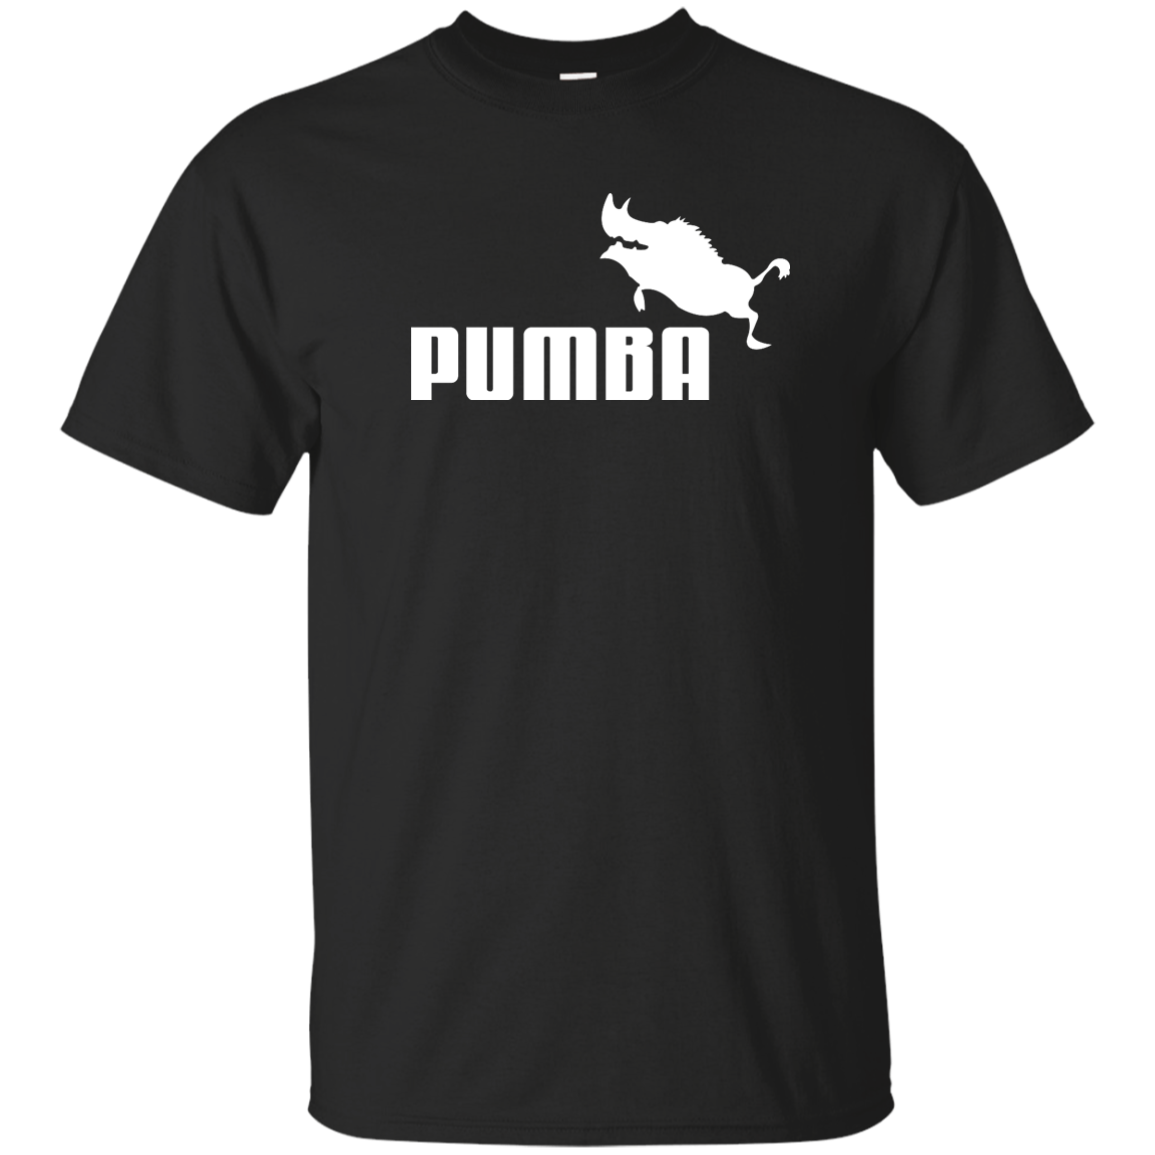 puma pumba shirt